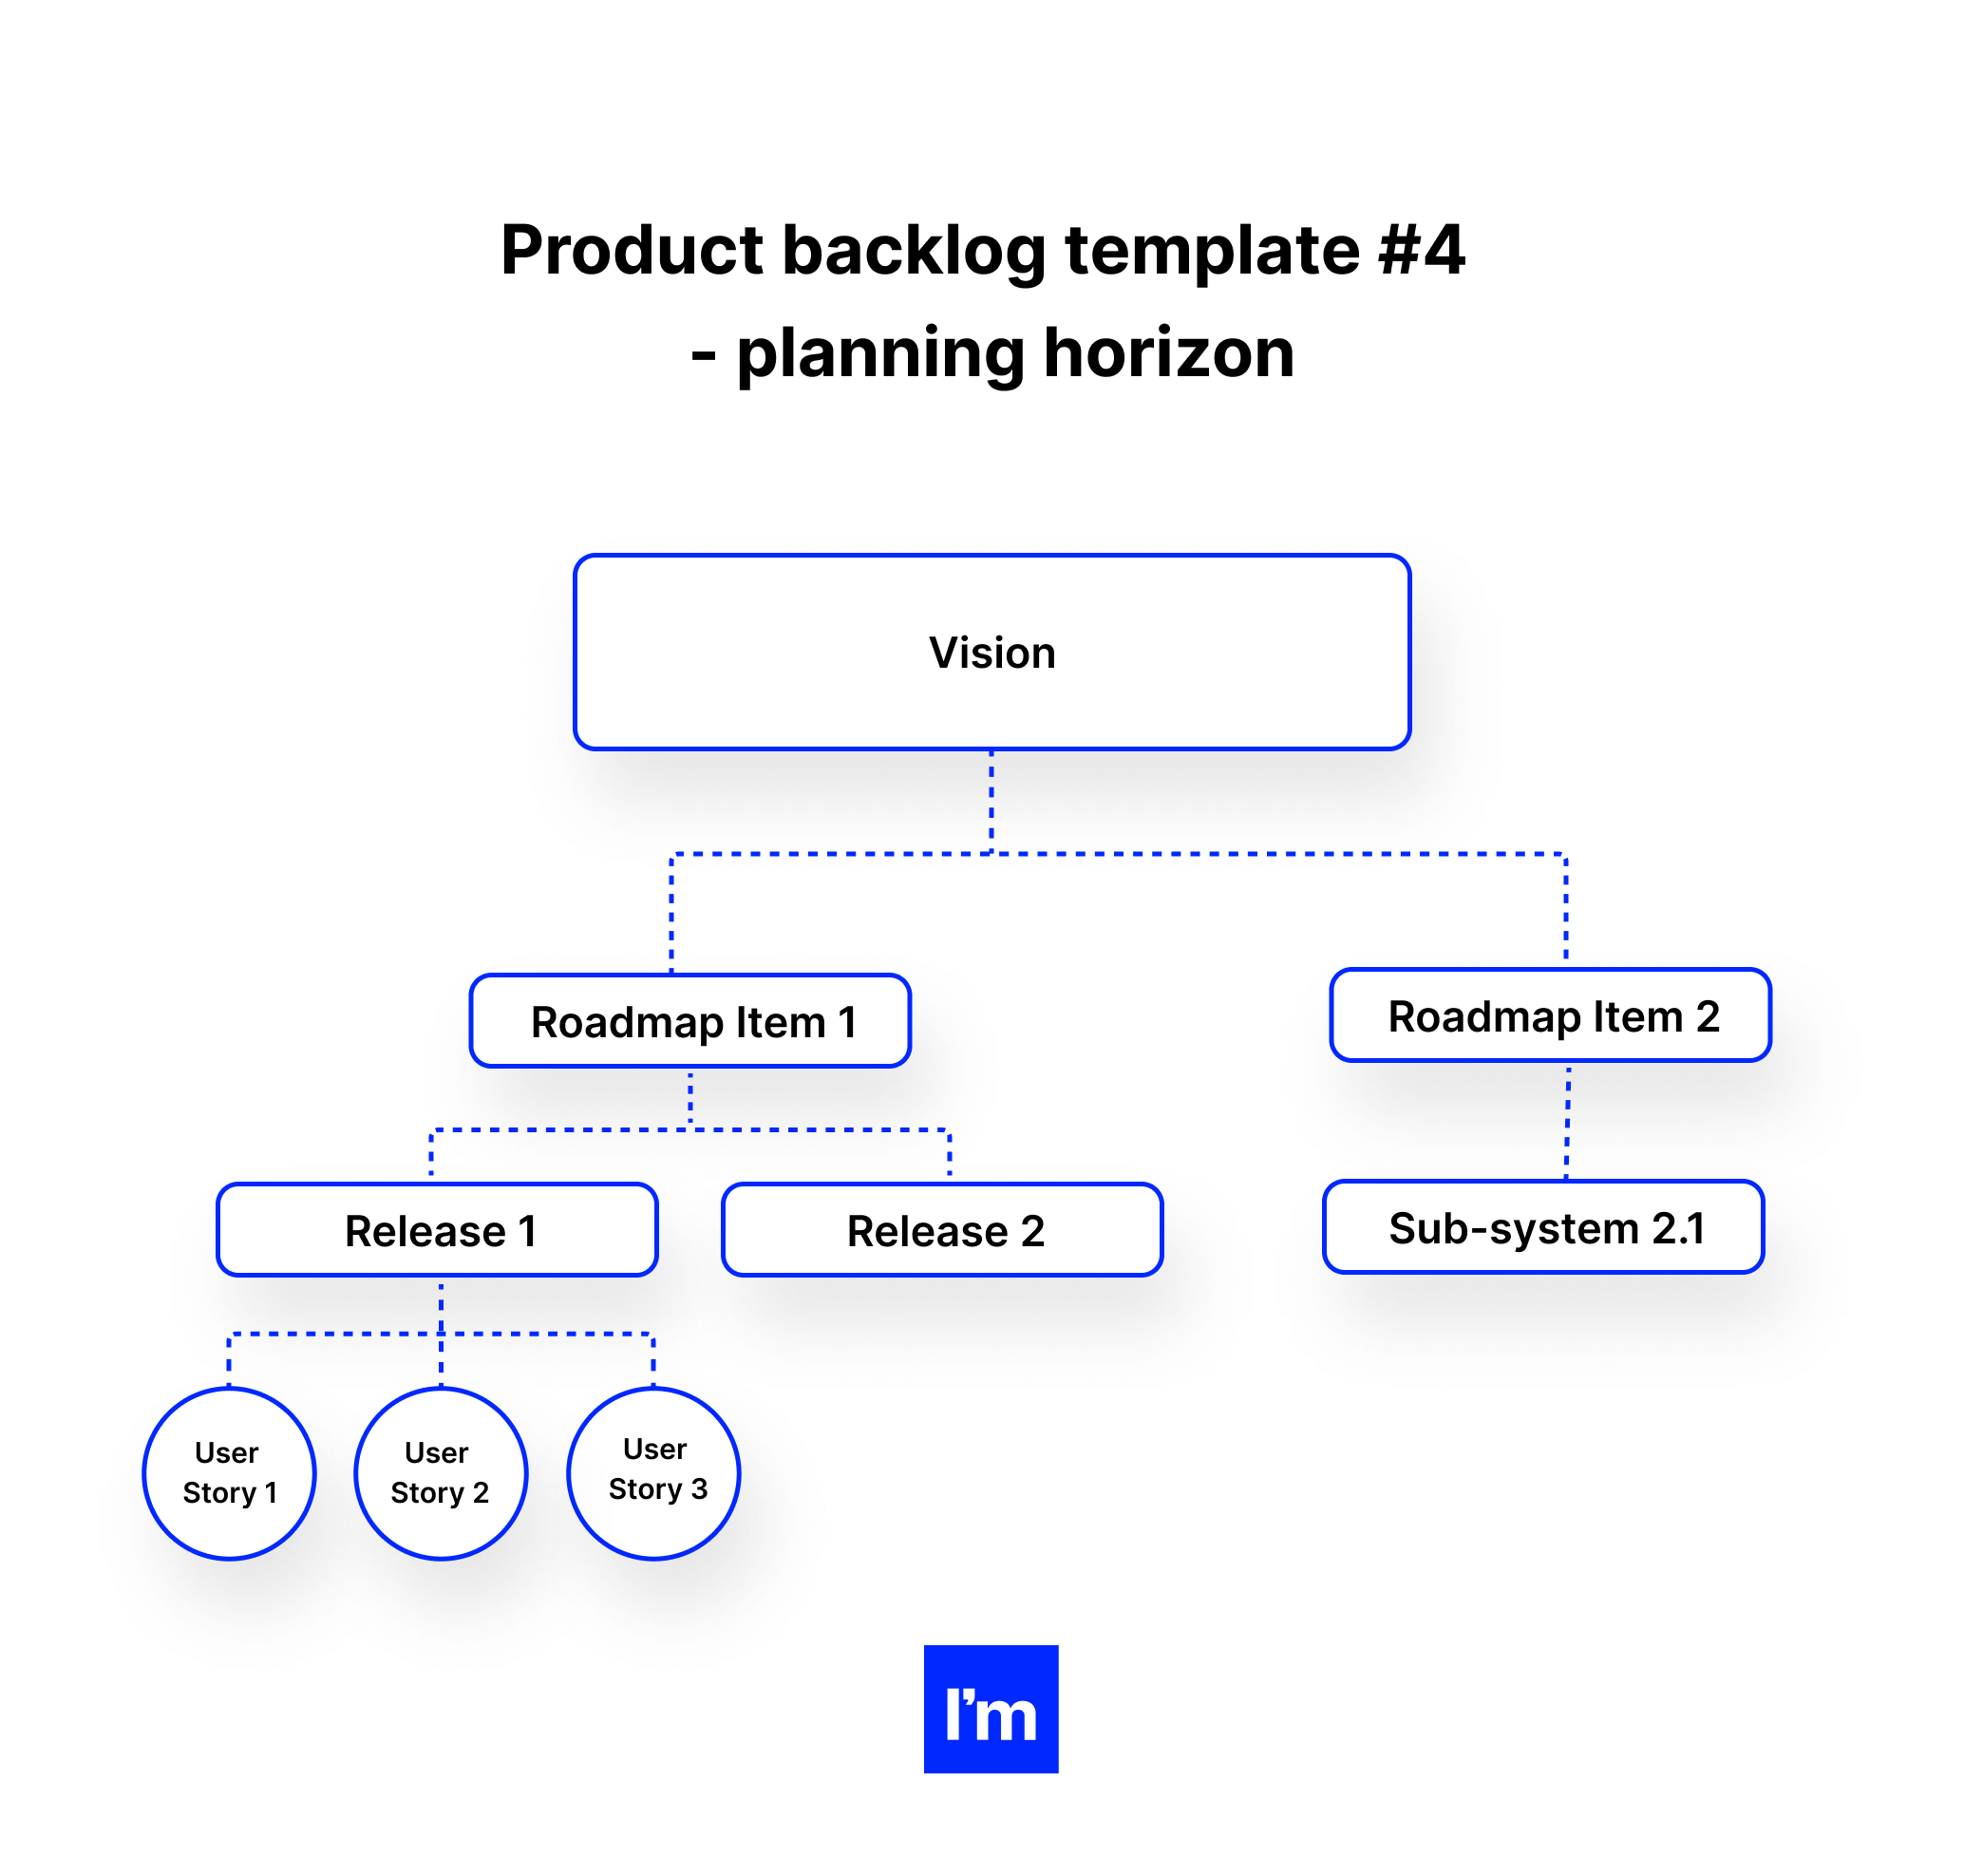 Product backlog template #4 - planning horizon